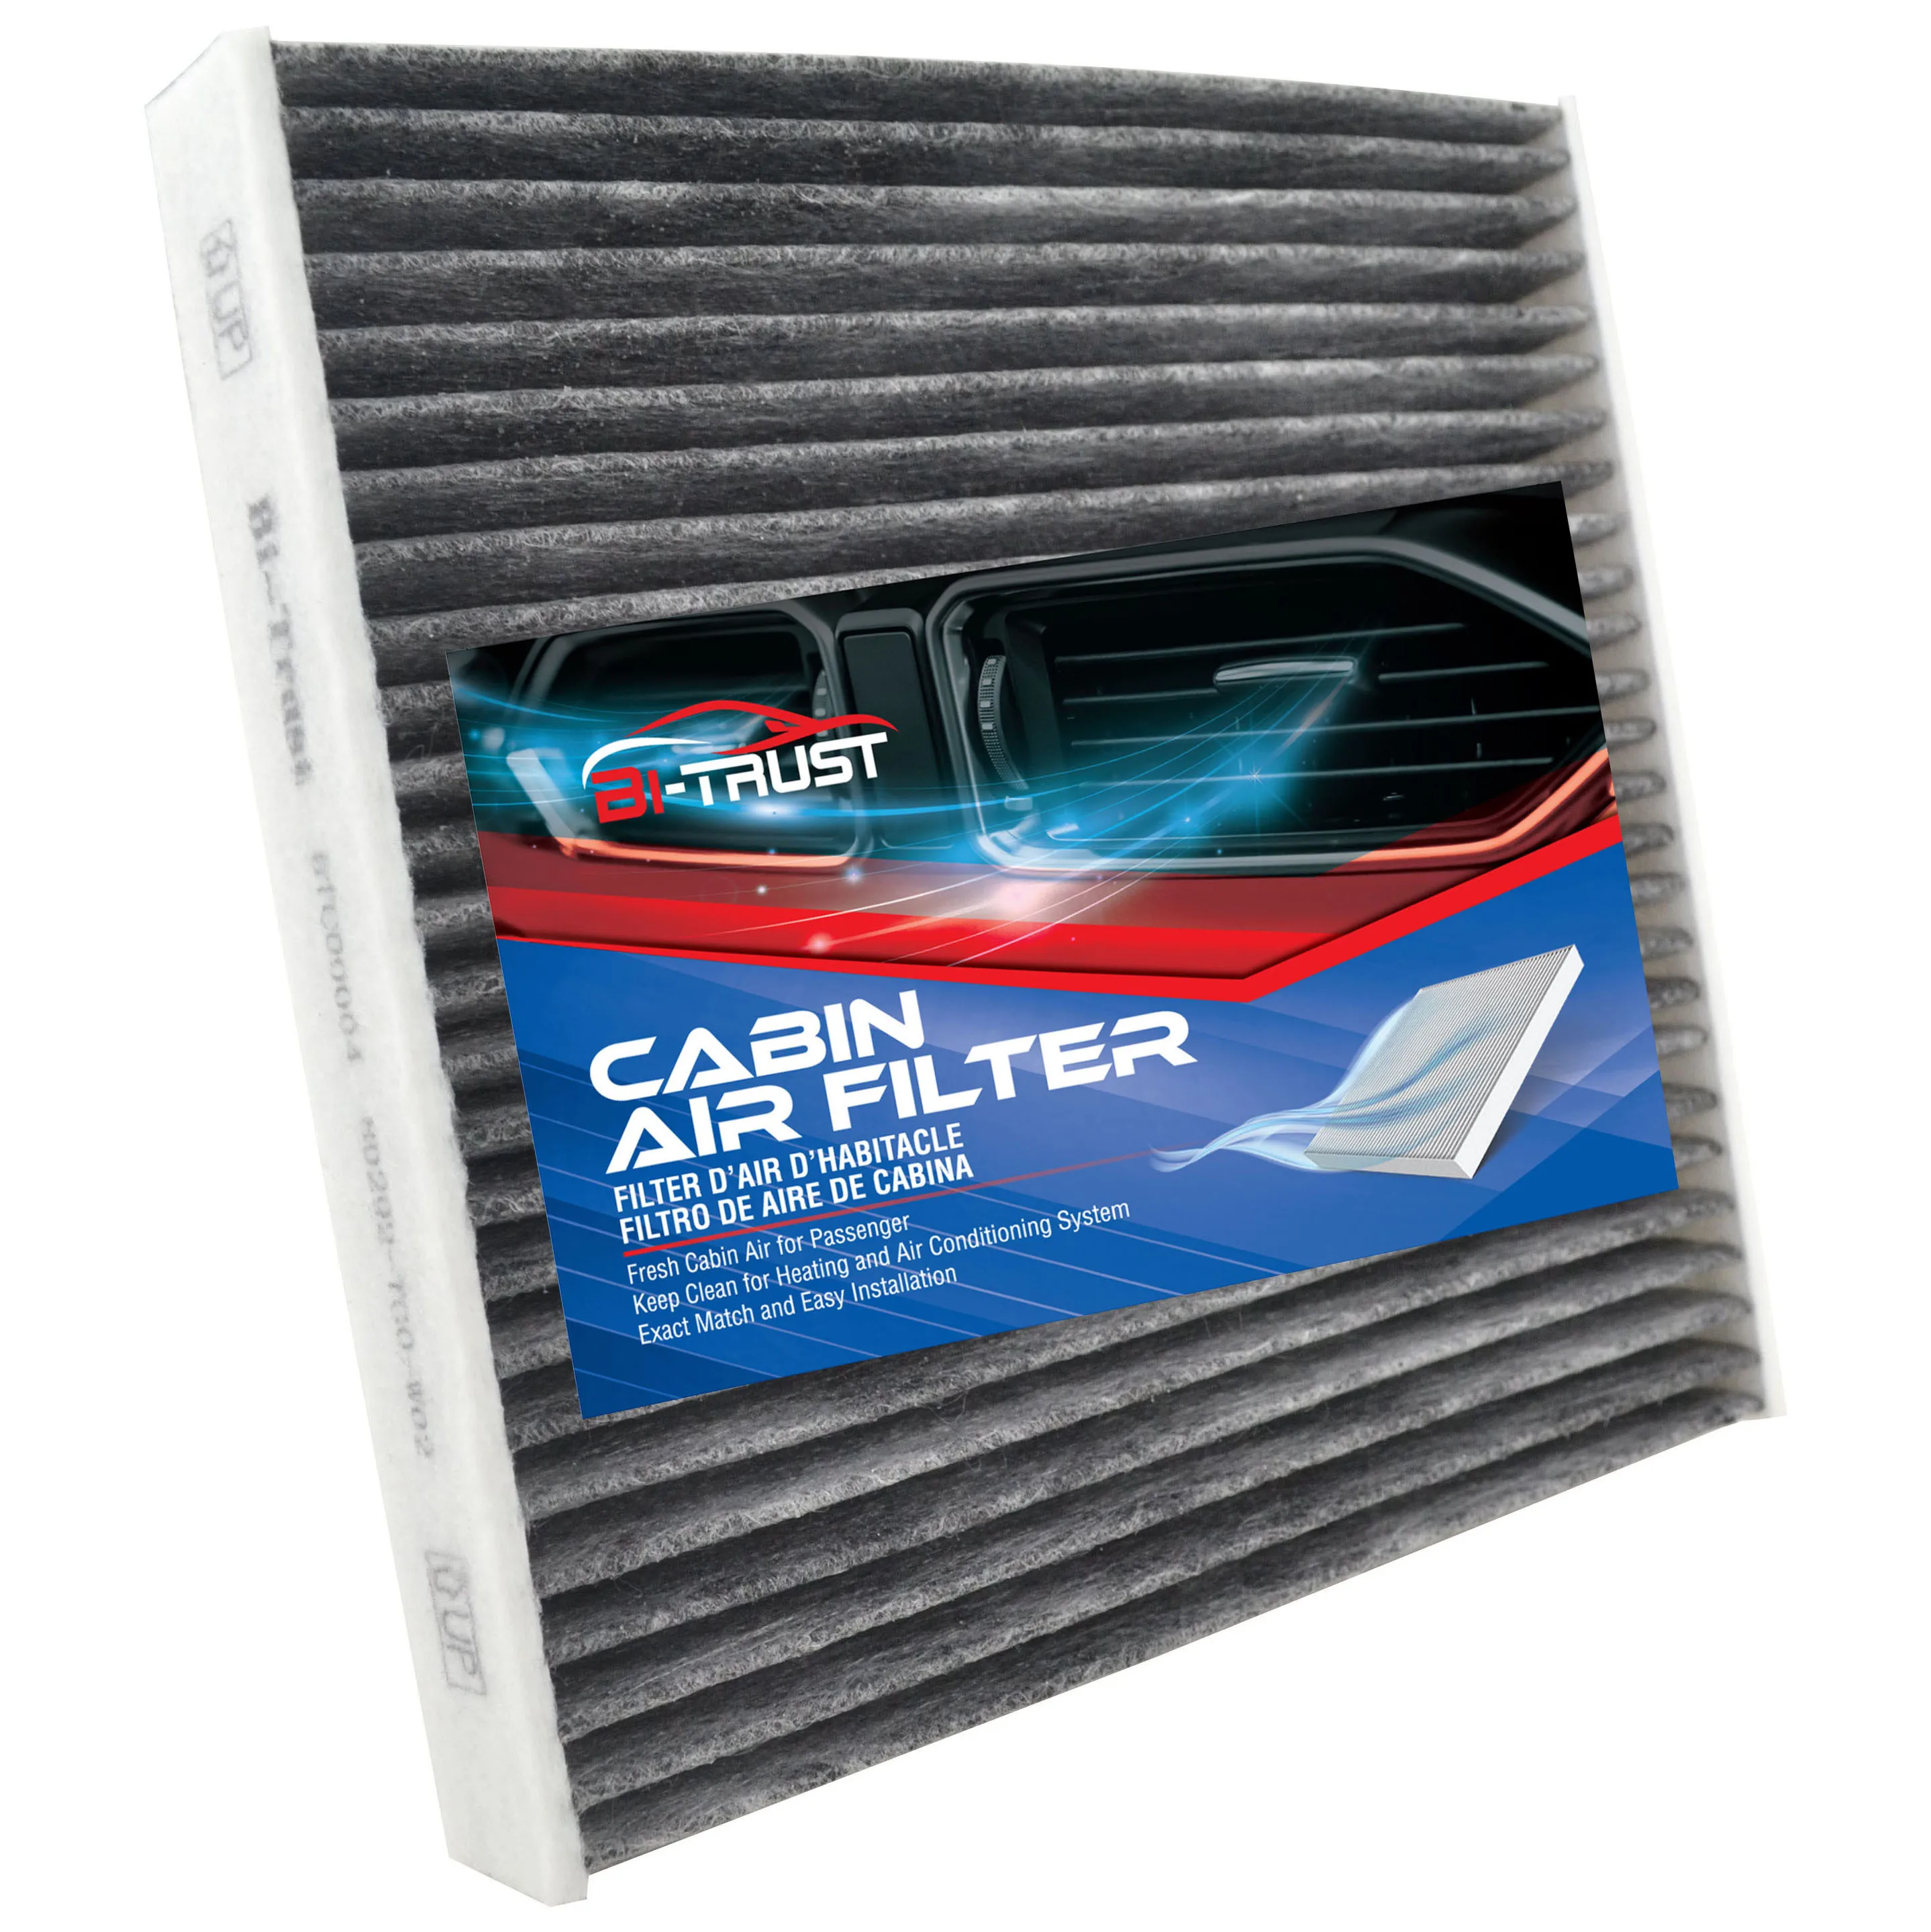 Bi-trust-filtro de aire para cabina Acura RDX Honda Civic, claridad/CR-V/CR-Z/Fit/HR-V/Insight/Odyssey 80291-T5R-A01 CF11182